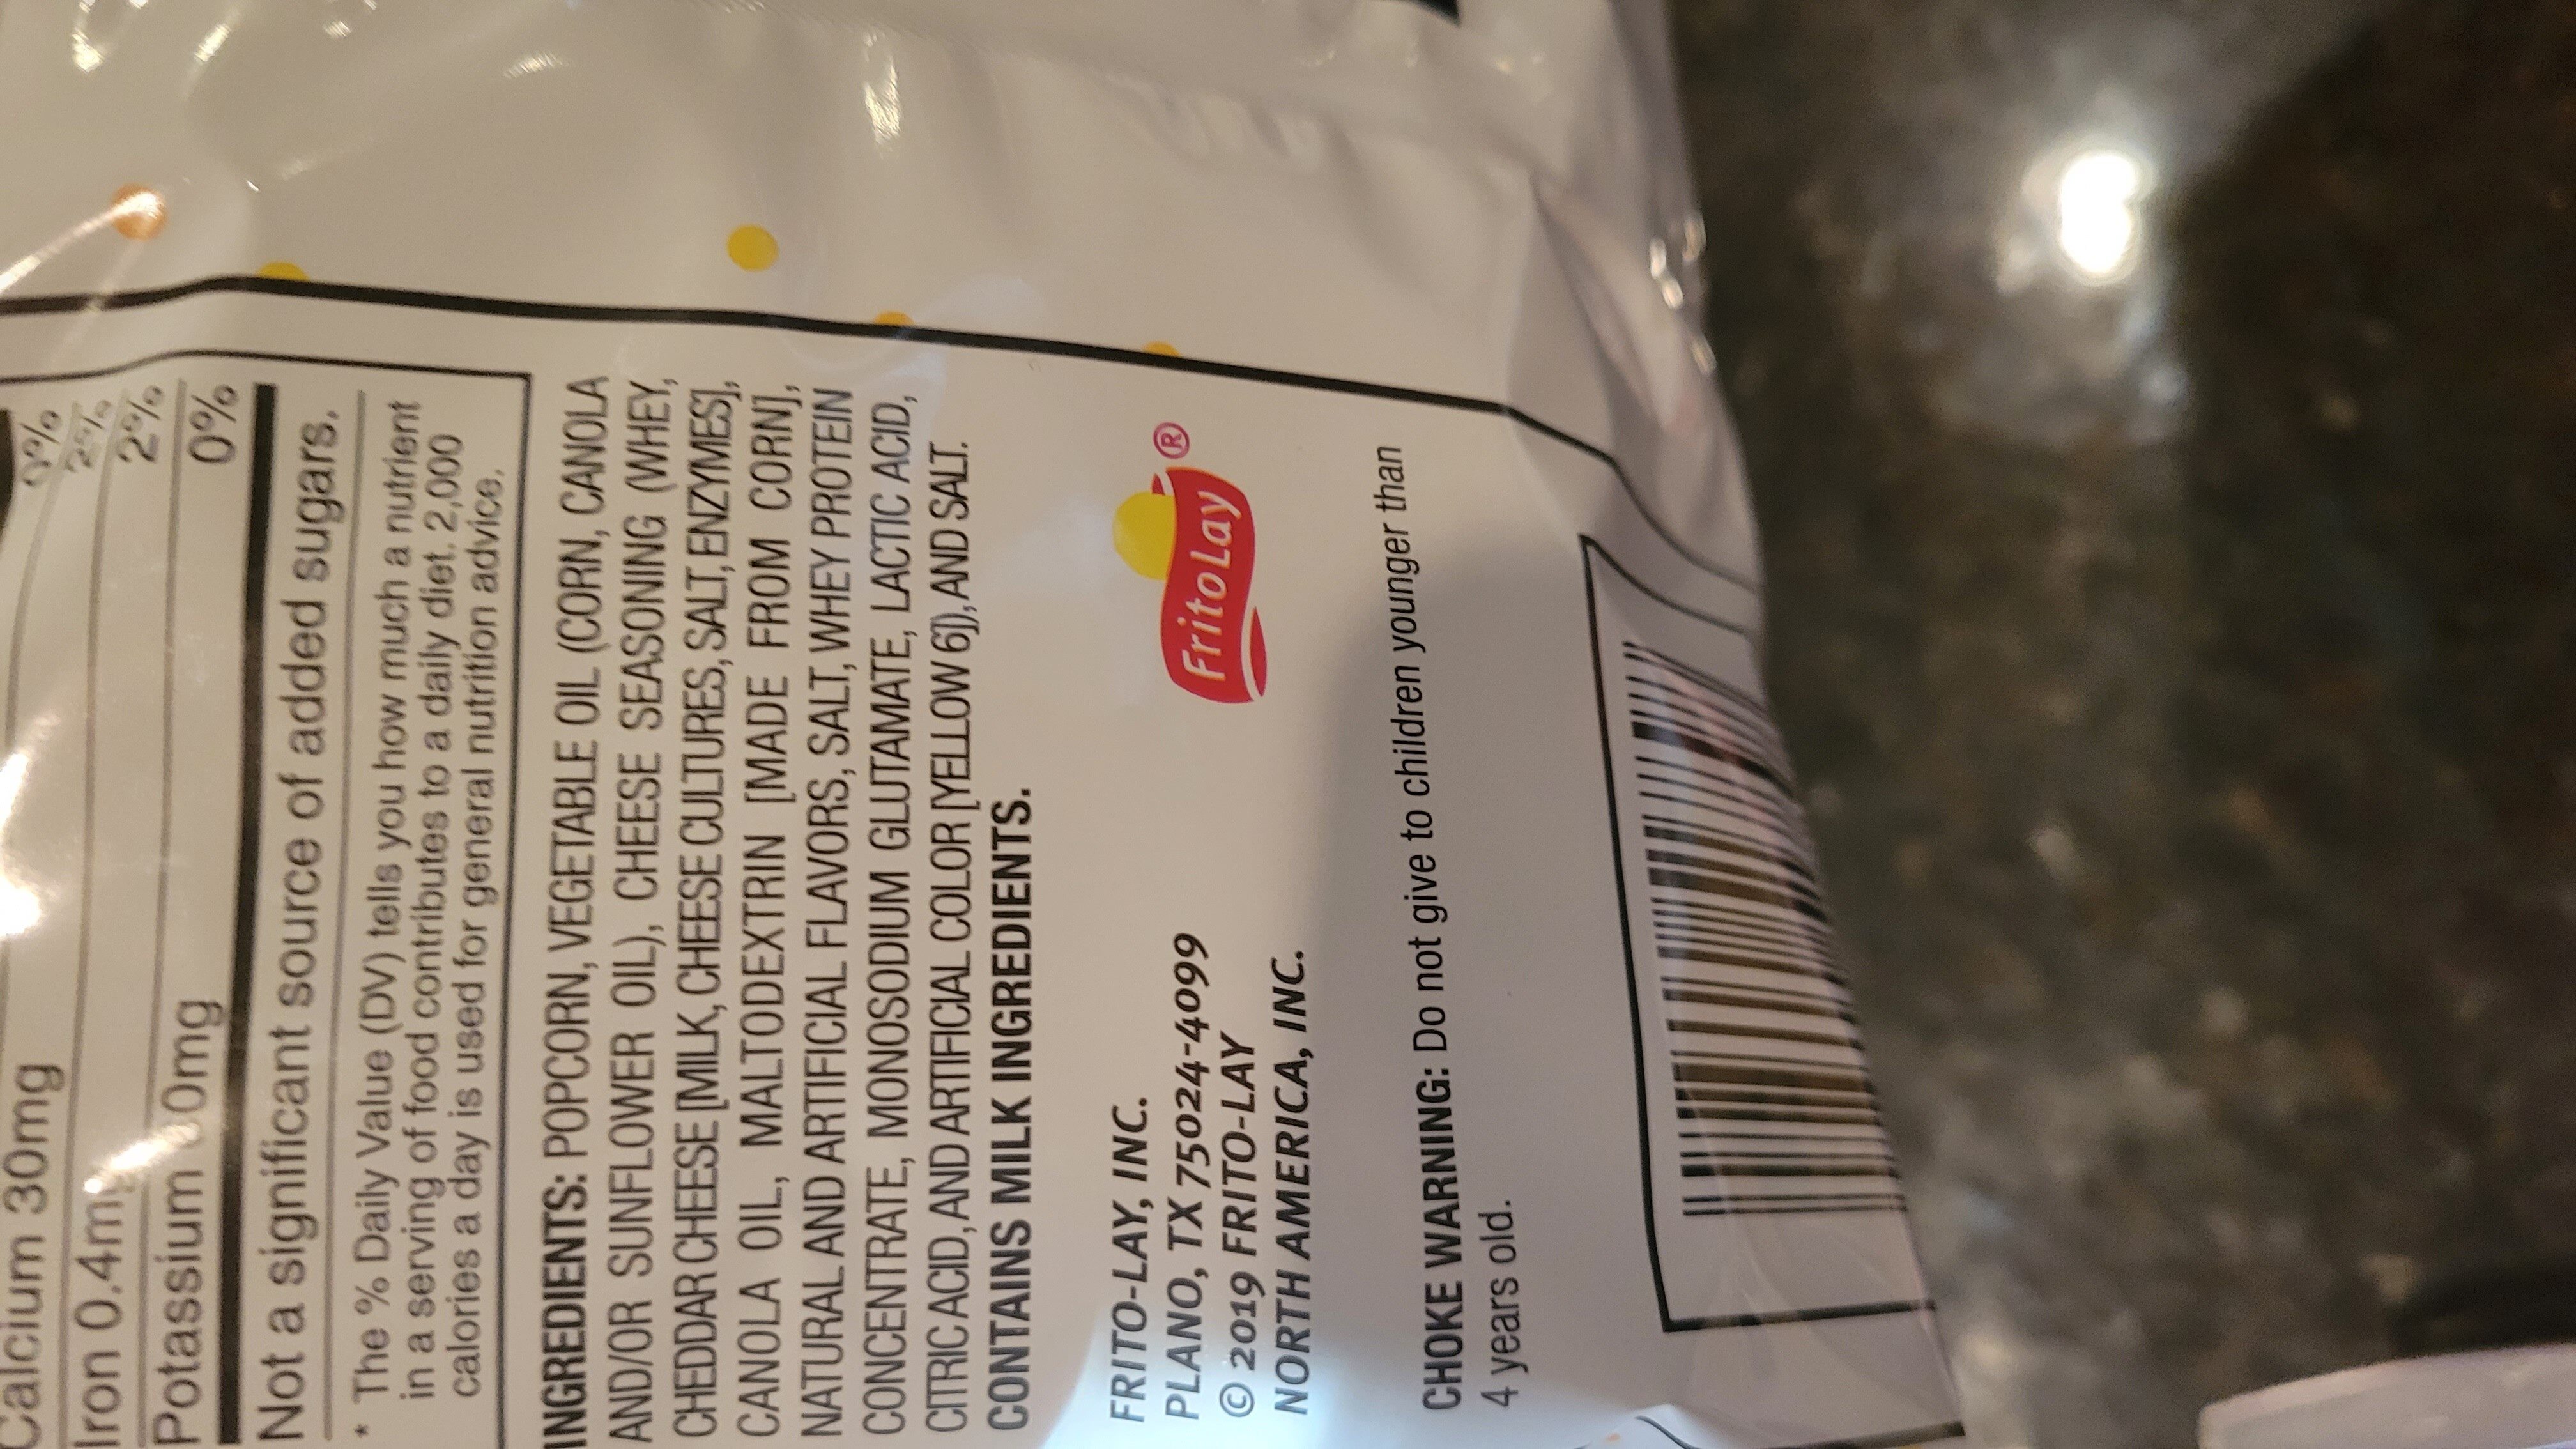 Cheetos popcorn - Ingredients